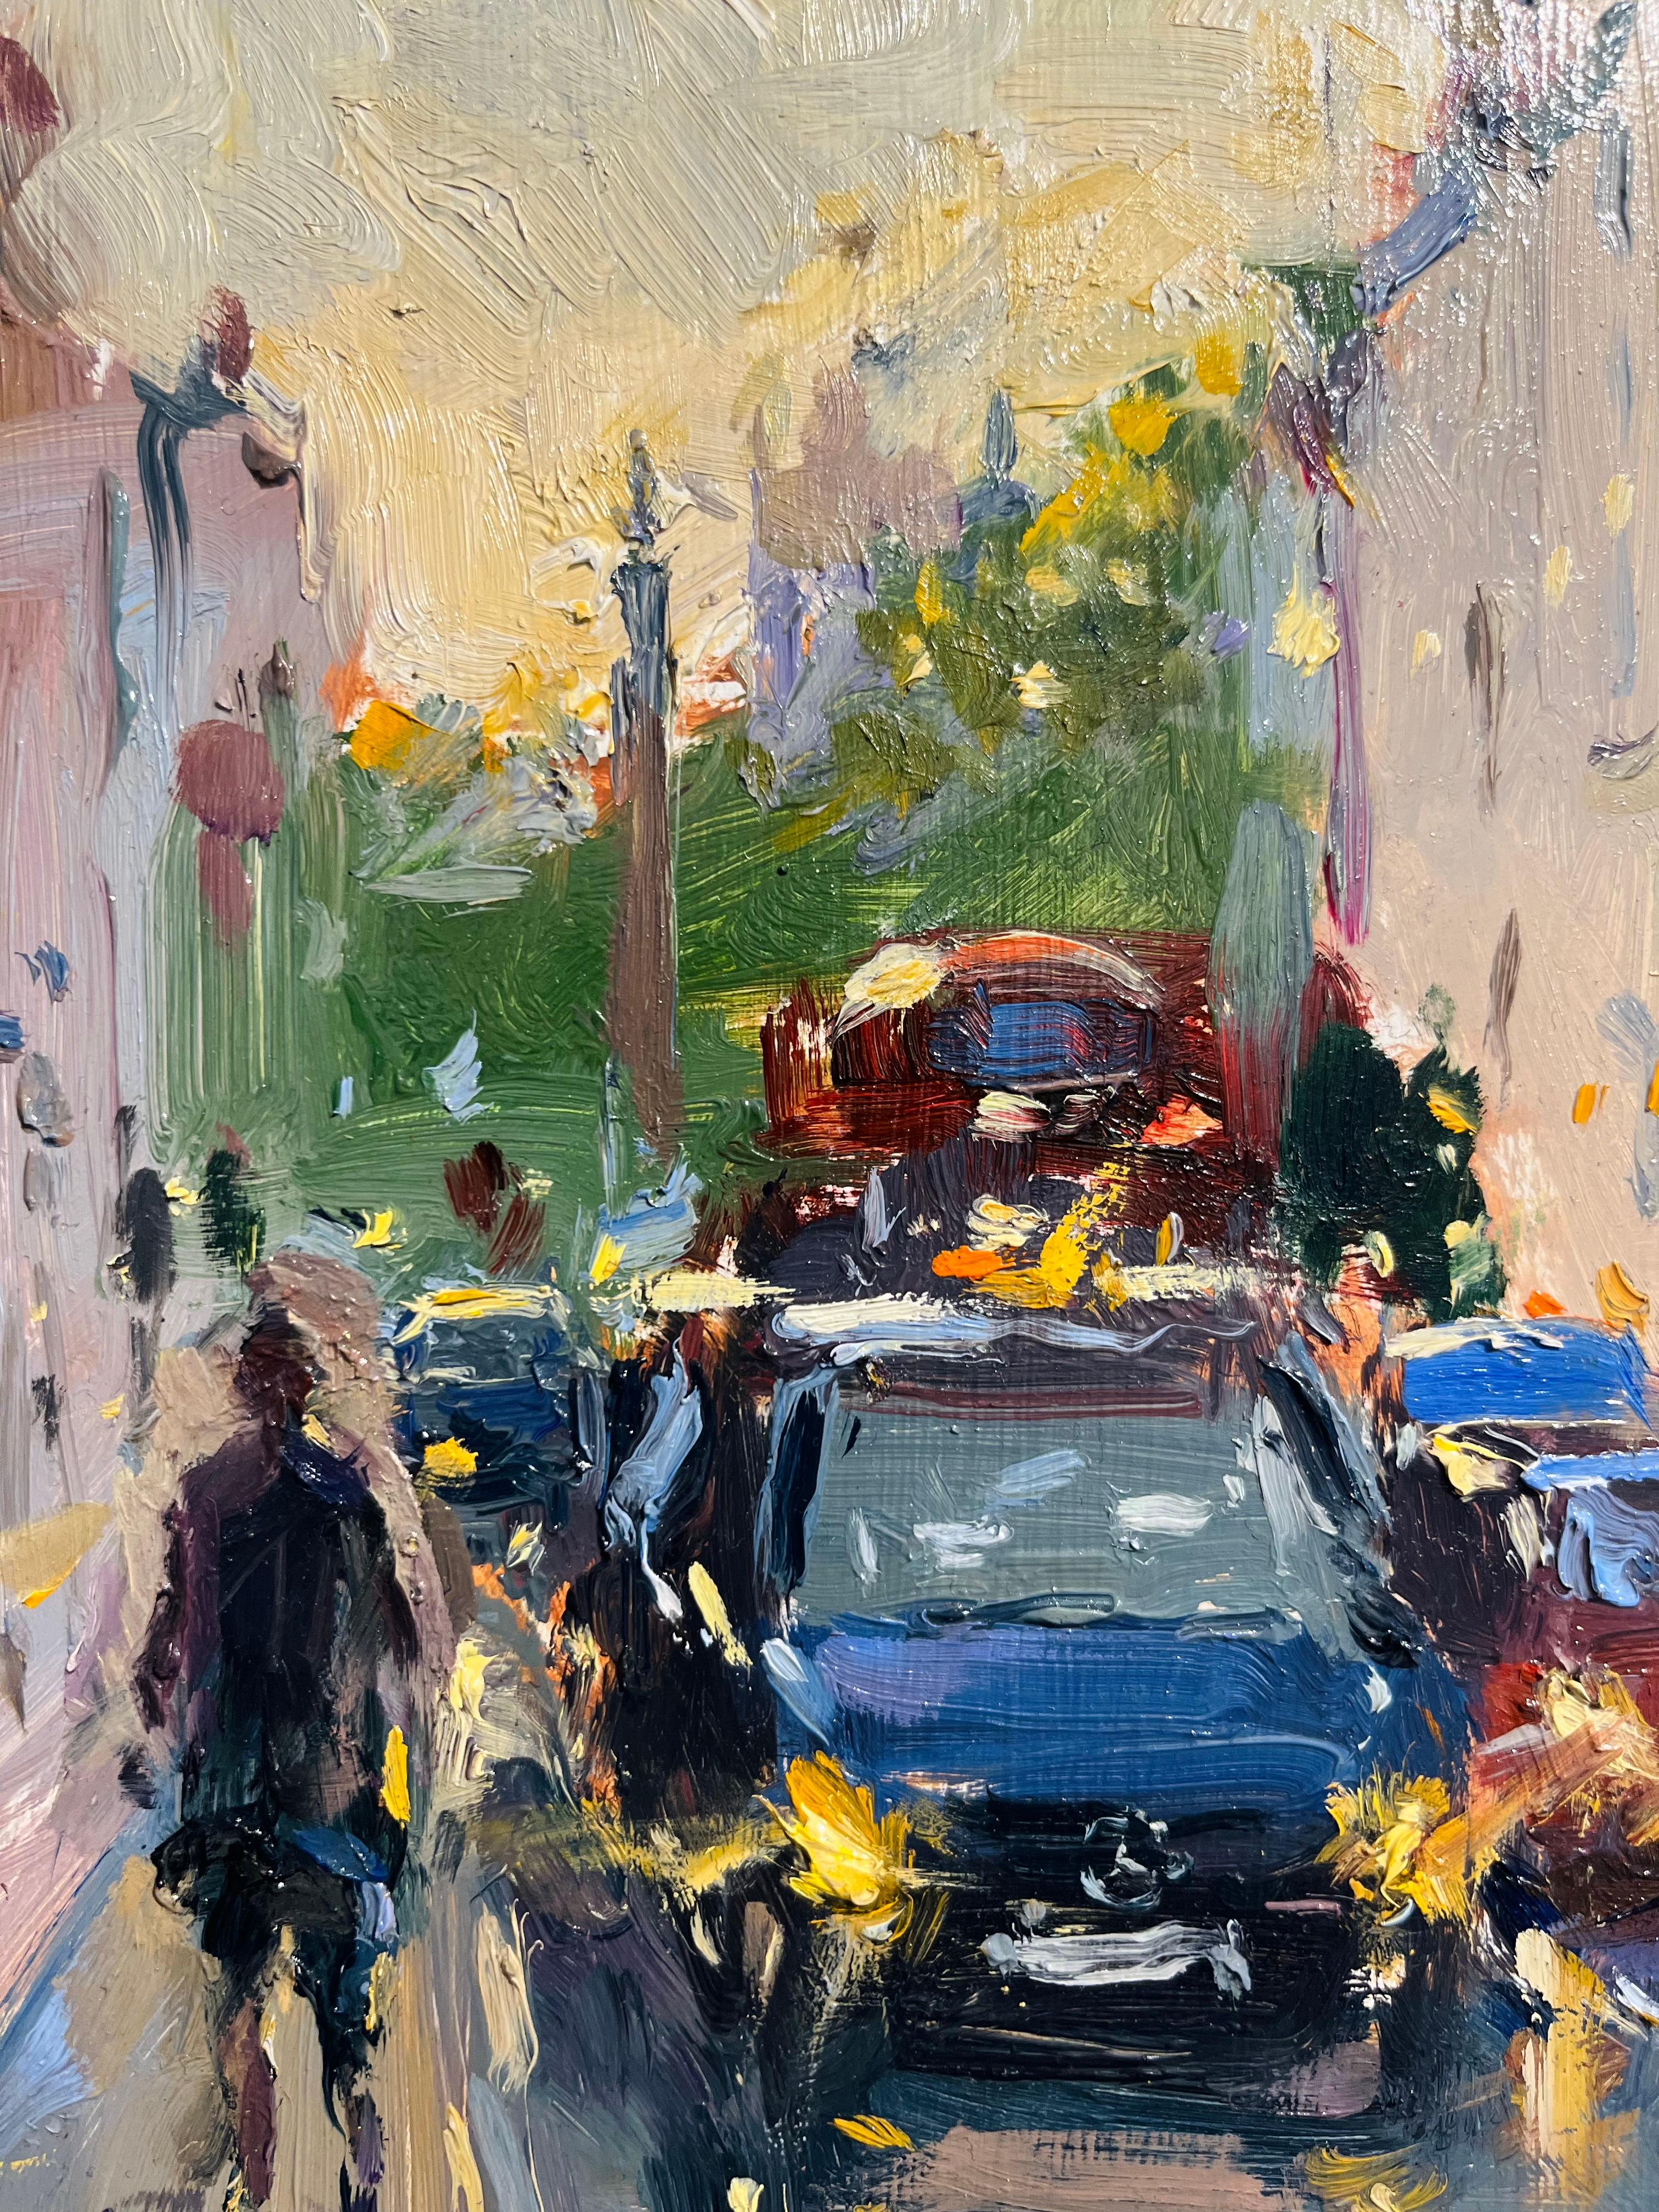 Regent Street St James at Twilight-ORIGINAL Impressionism cityscape oil painting - Impressionist Painting by Tushar Sabale